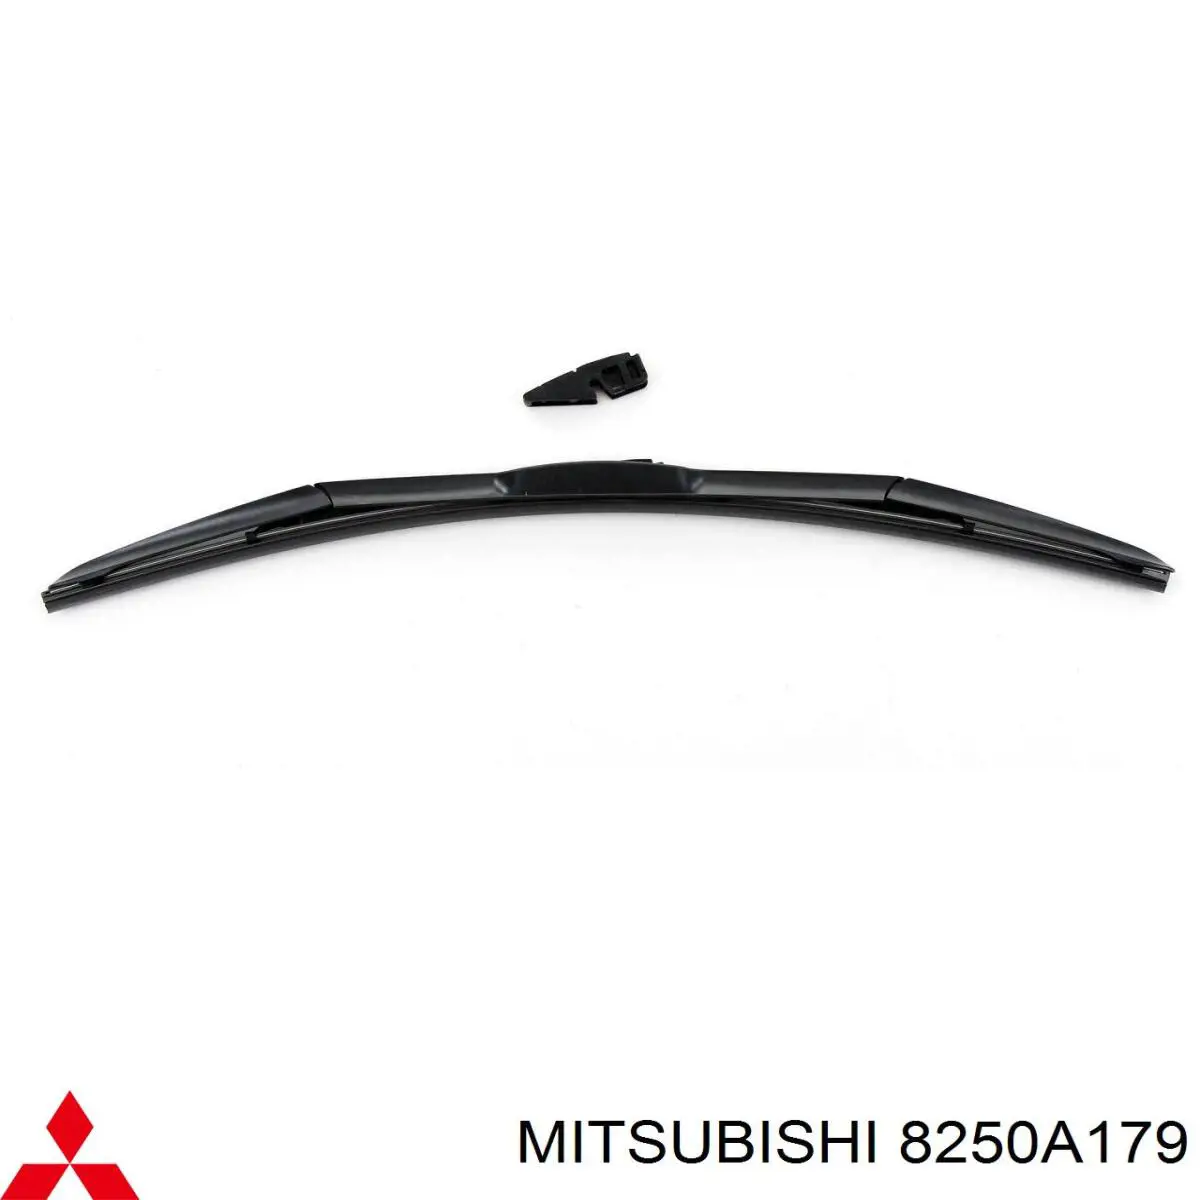 8250A179 Mitsubishi elástico da escova de limpador pára-brisas de condutor